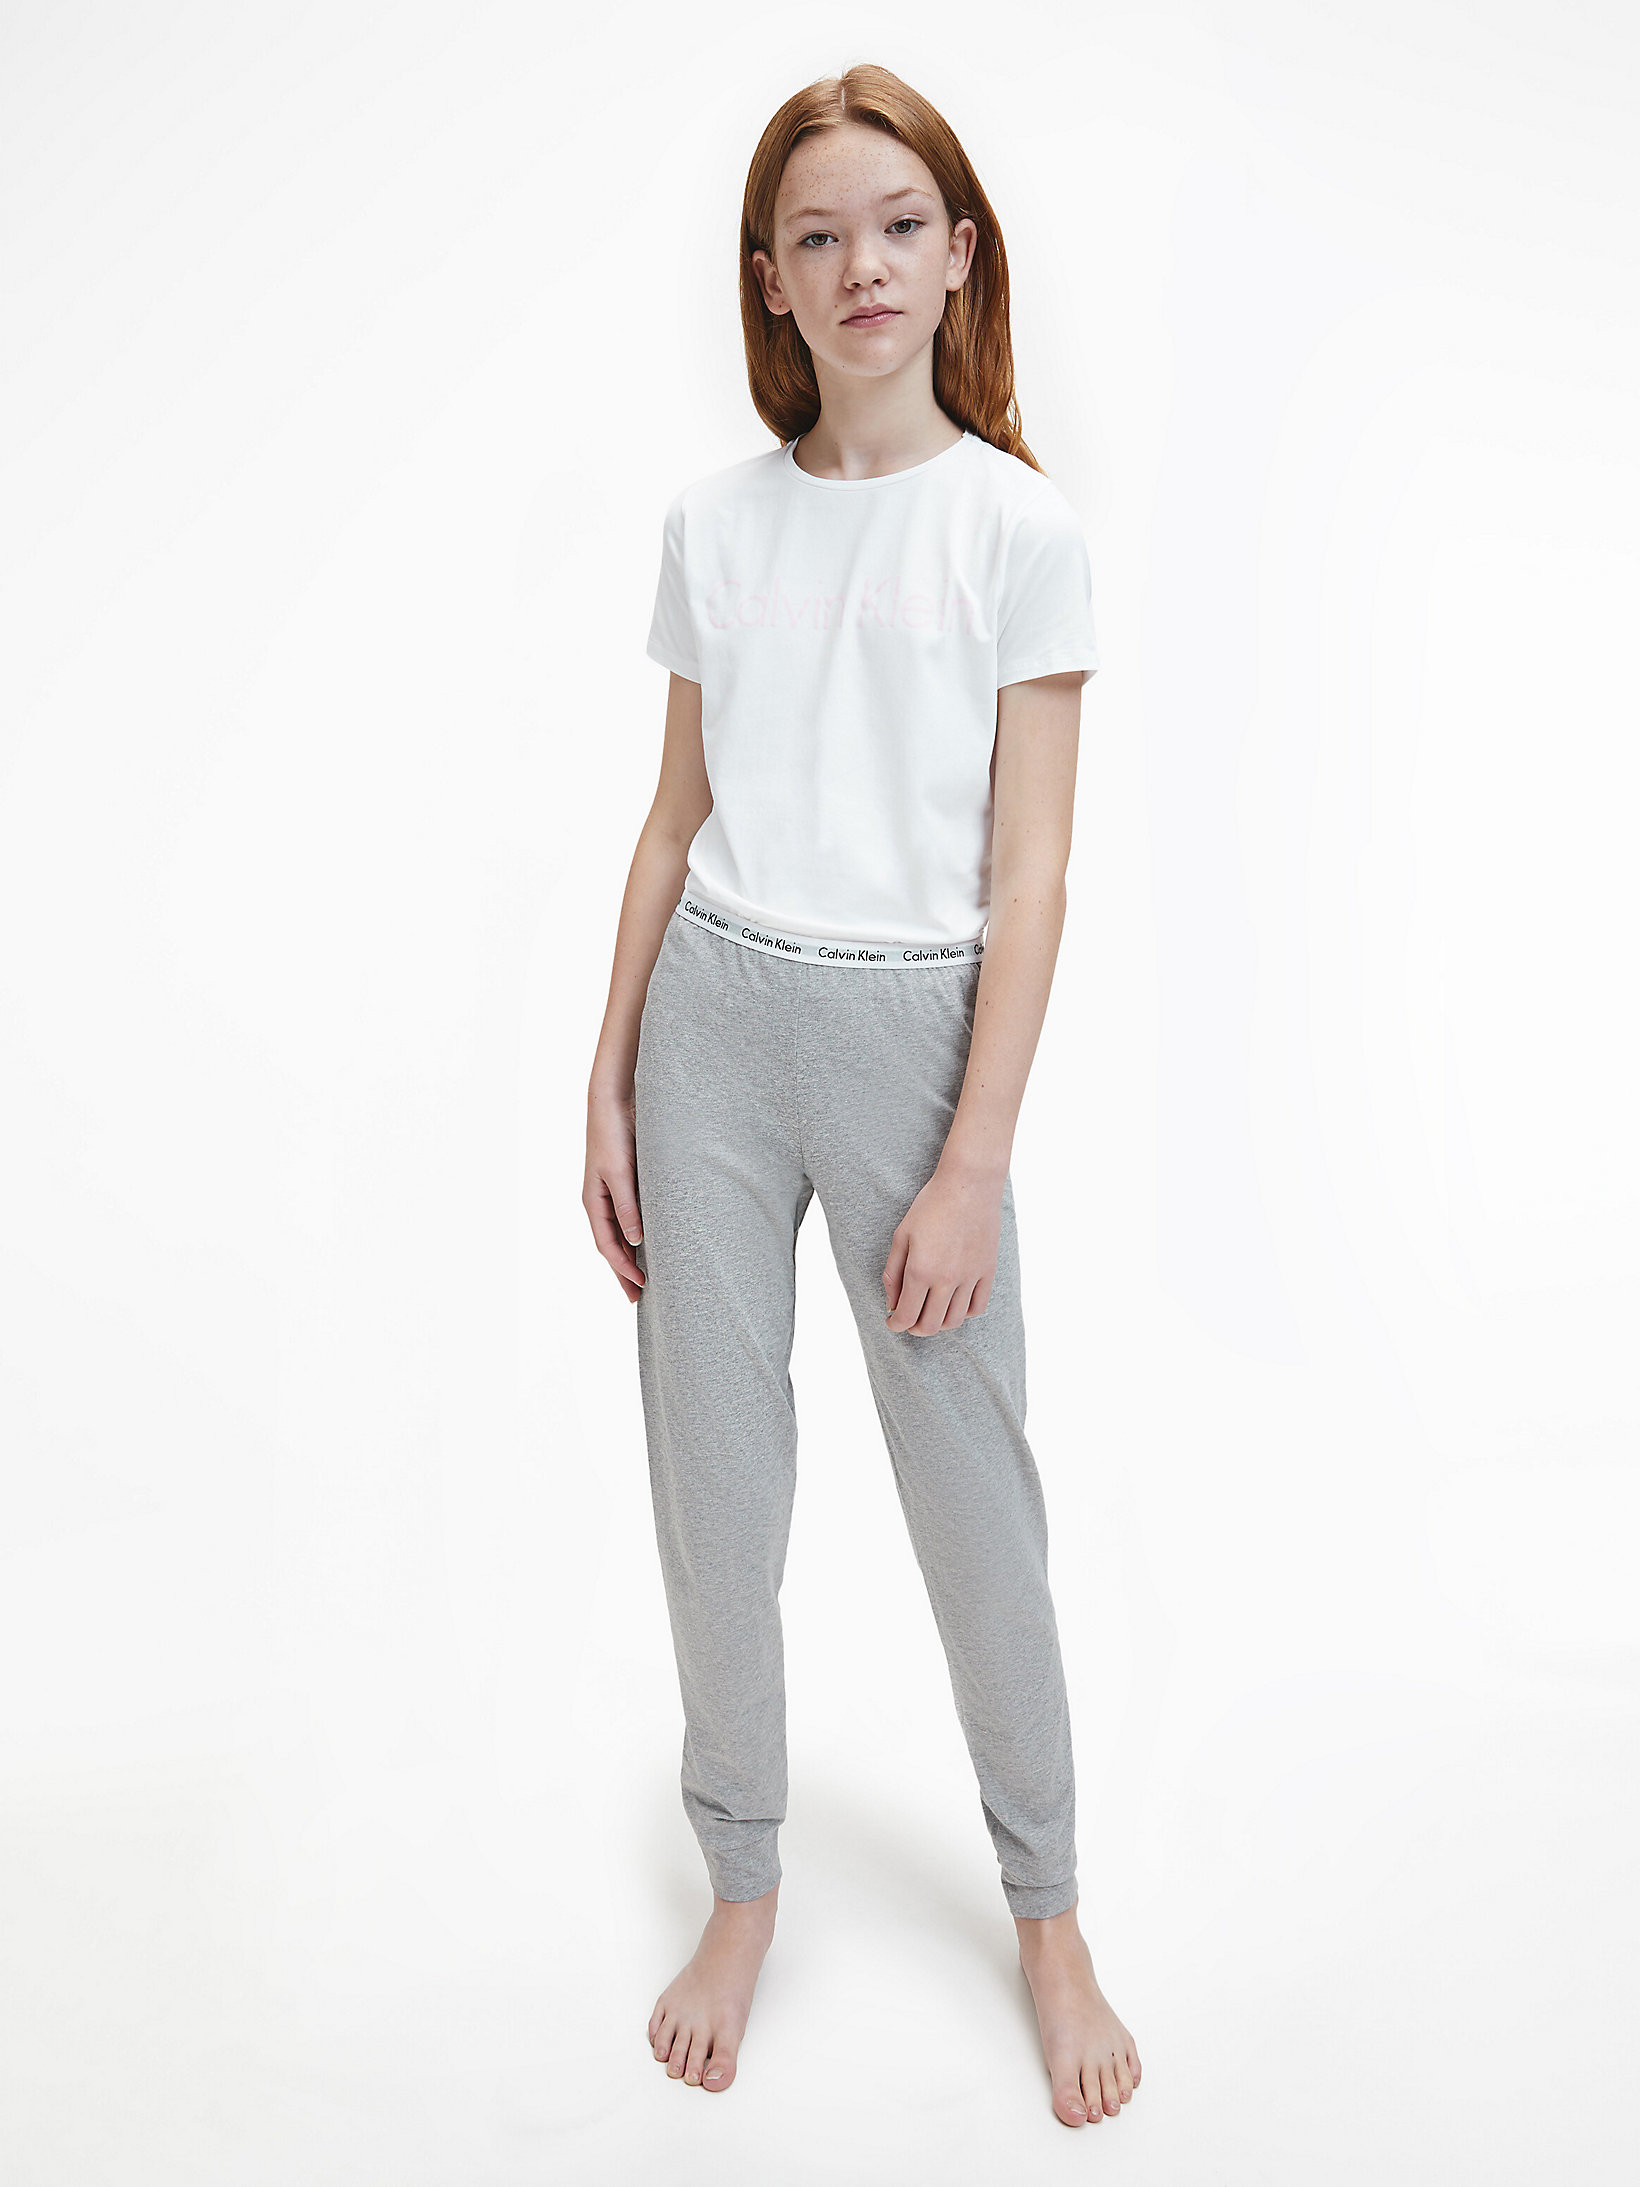 Pyjama Pour Fille - Modern Cotton > White/grey Htr > undefined girls > Calvin Klein